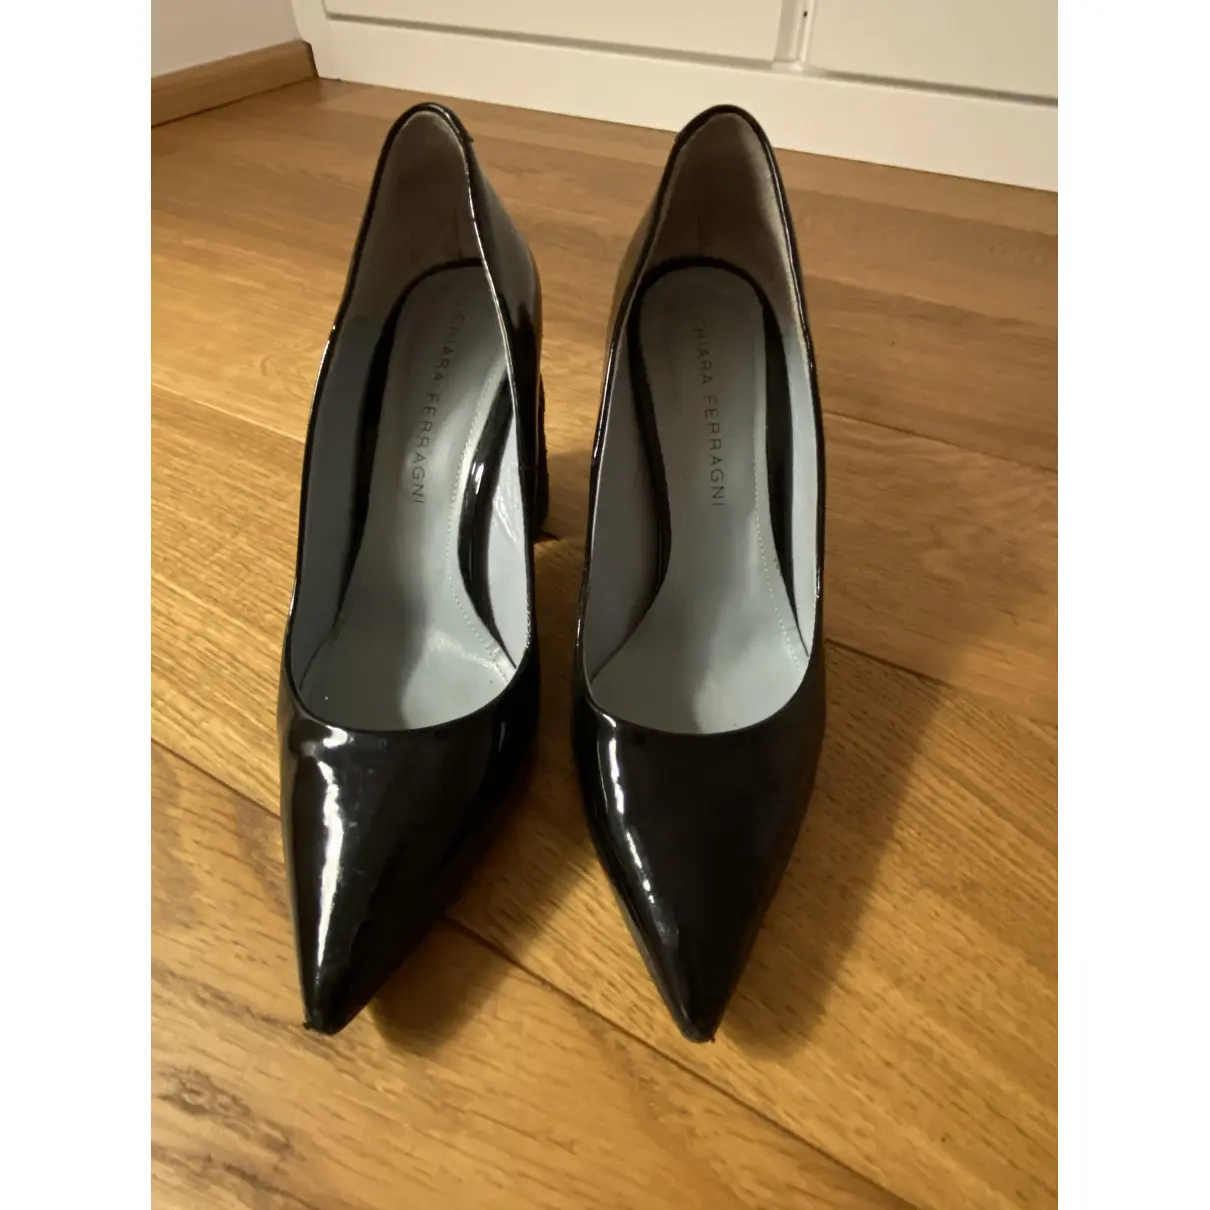 Buy Chiara Ferragni Patent leather heels online